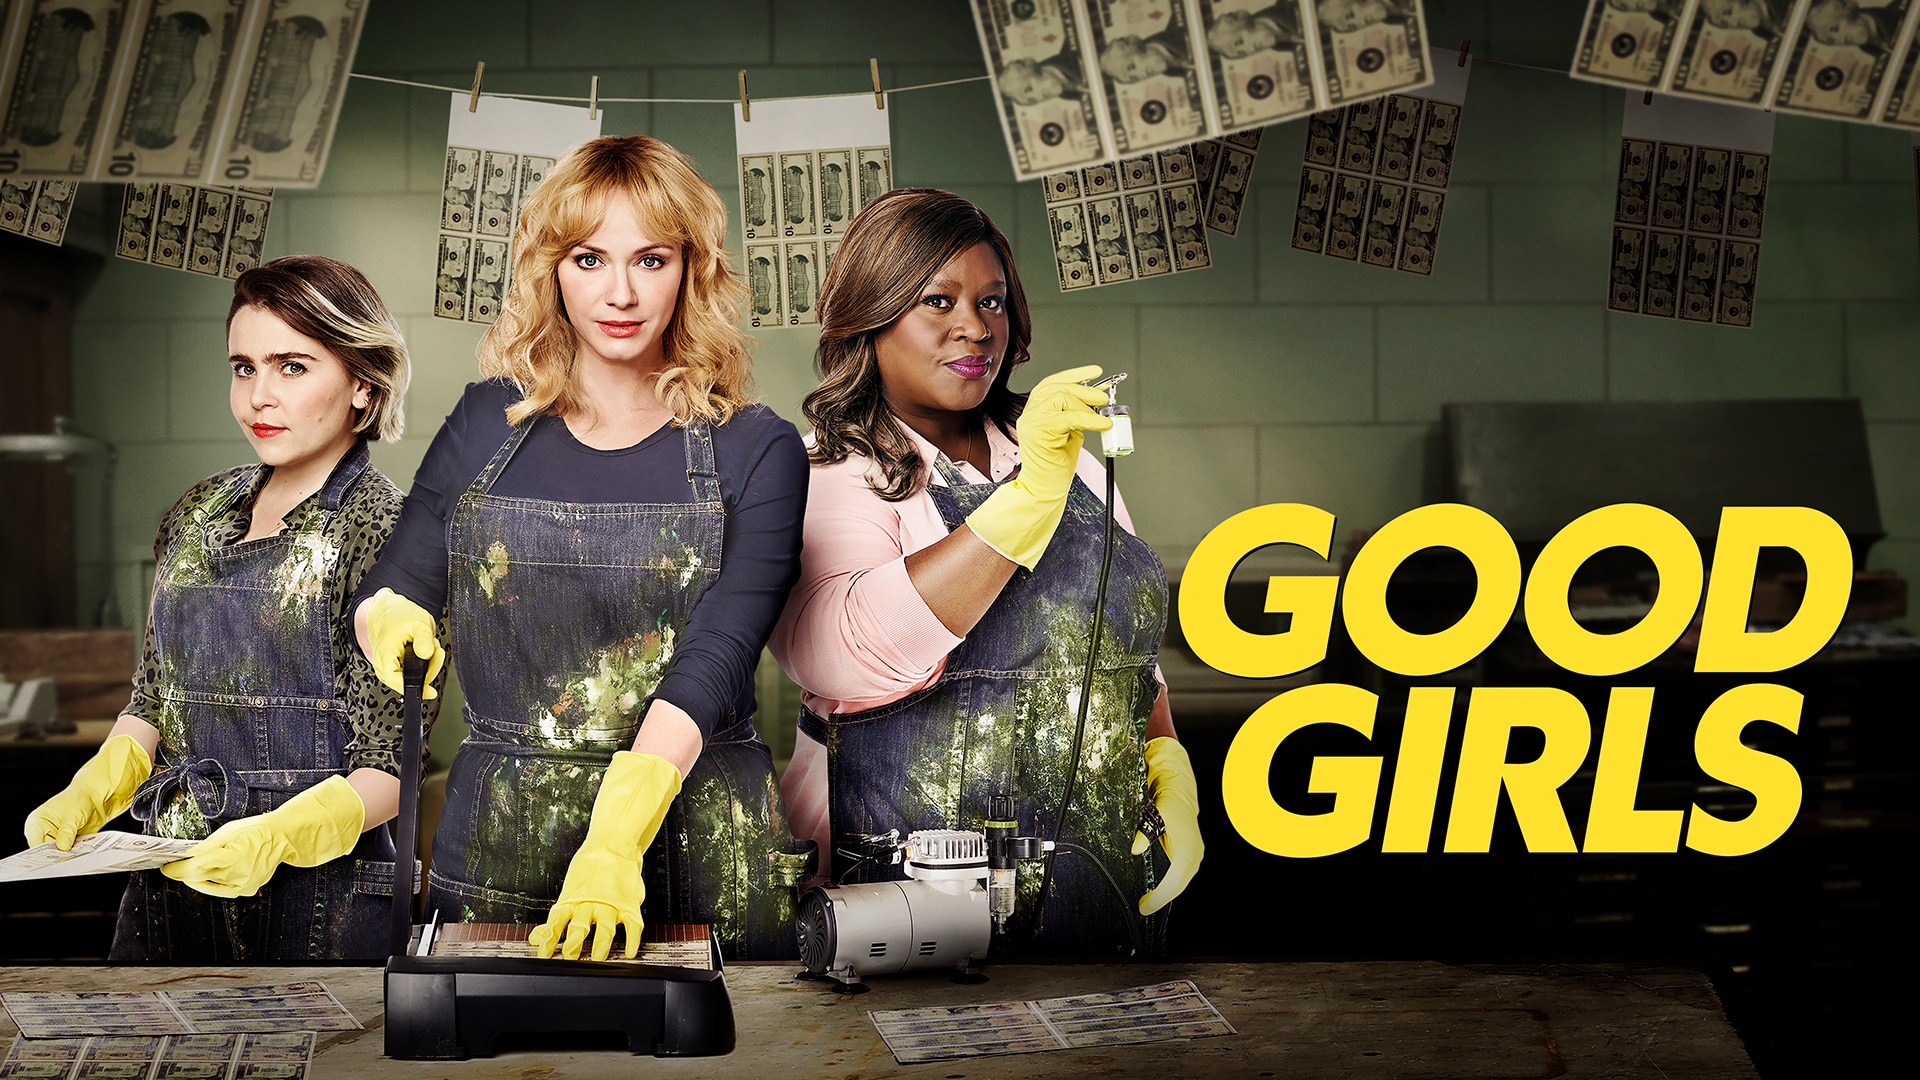 Watch Good Girls Episodes at NBC.com